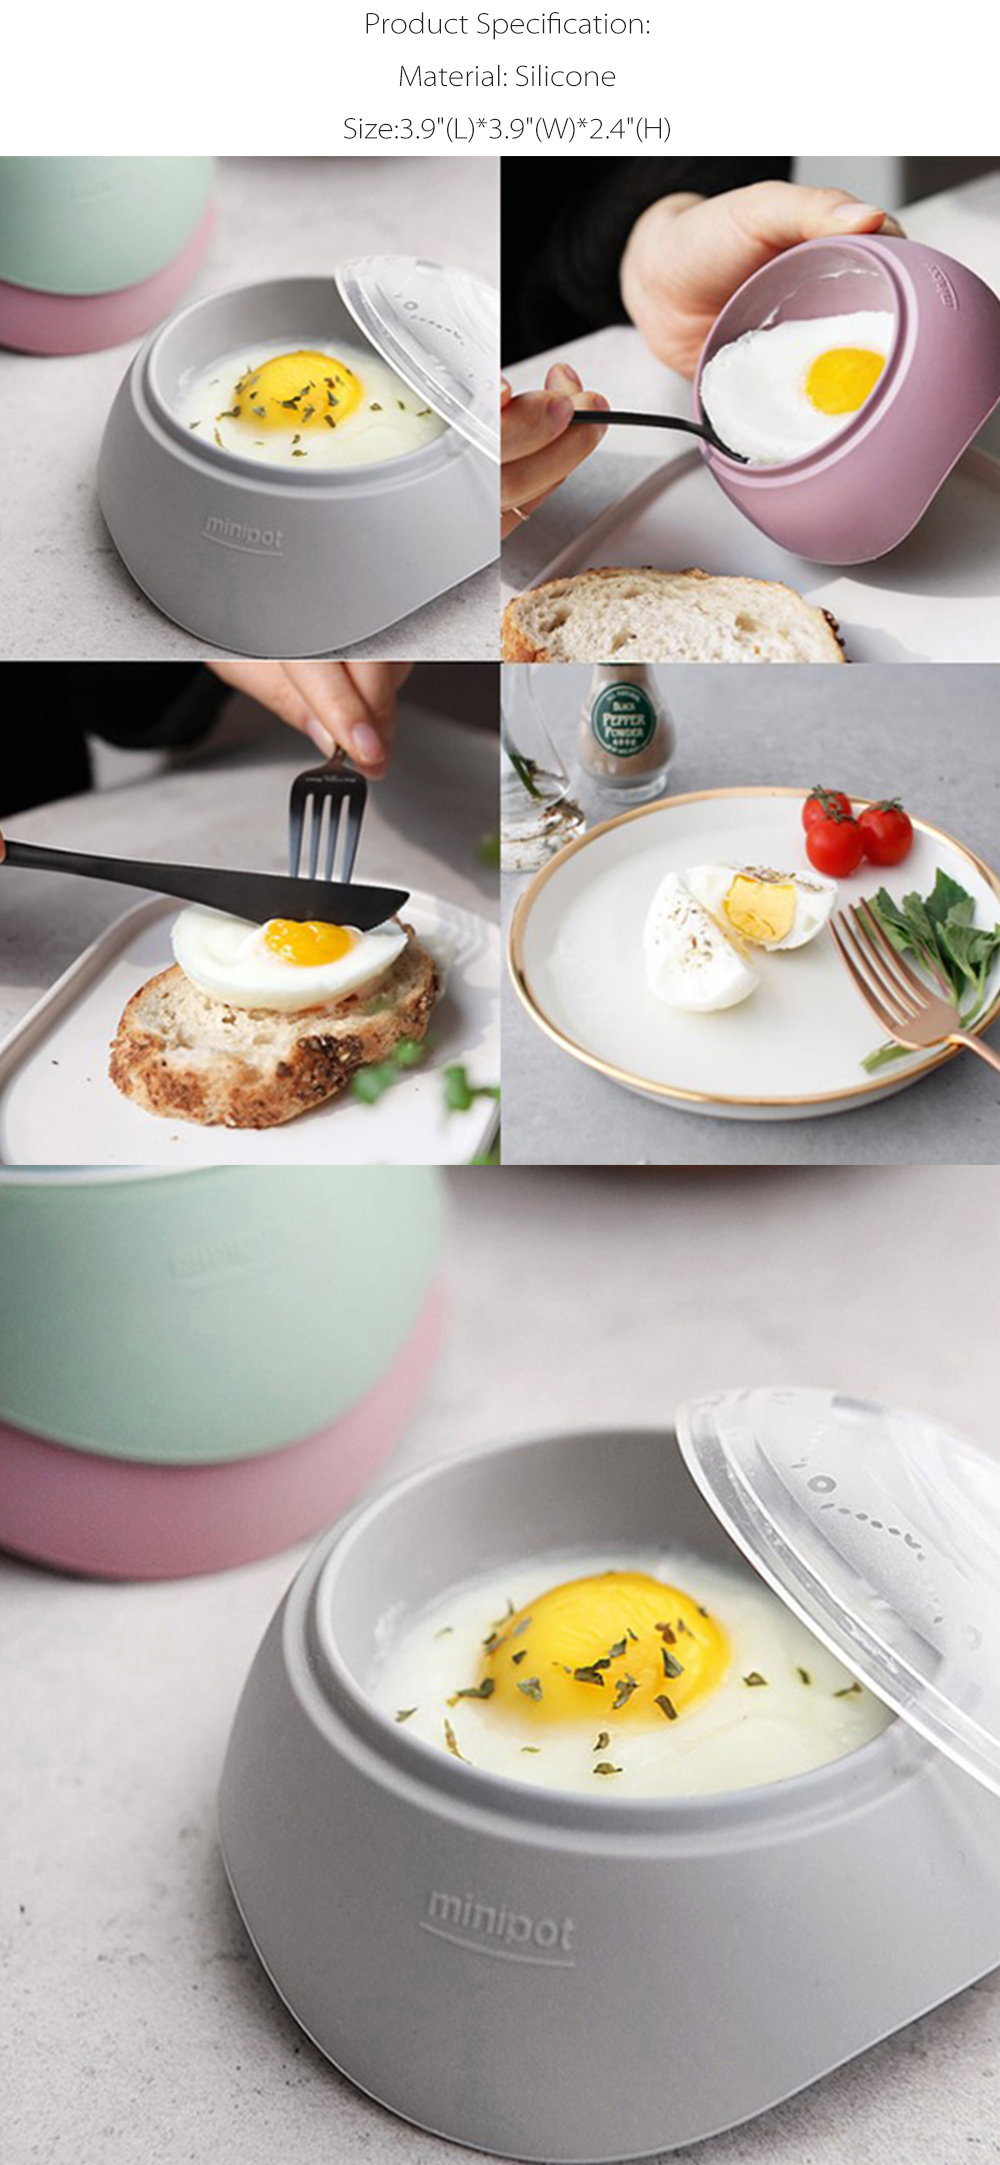 EggPlus Vertical Egg Cooker - ApolloBox